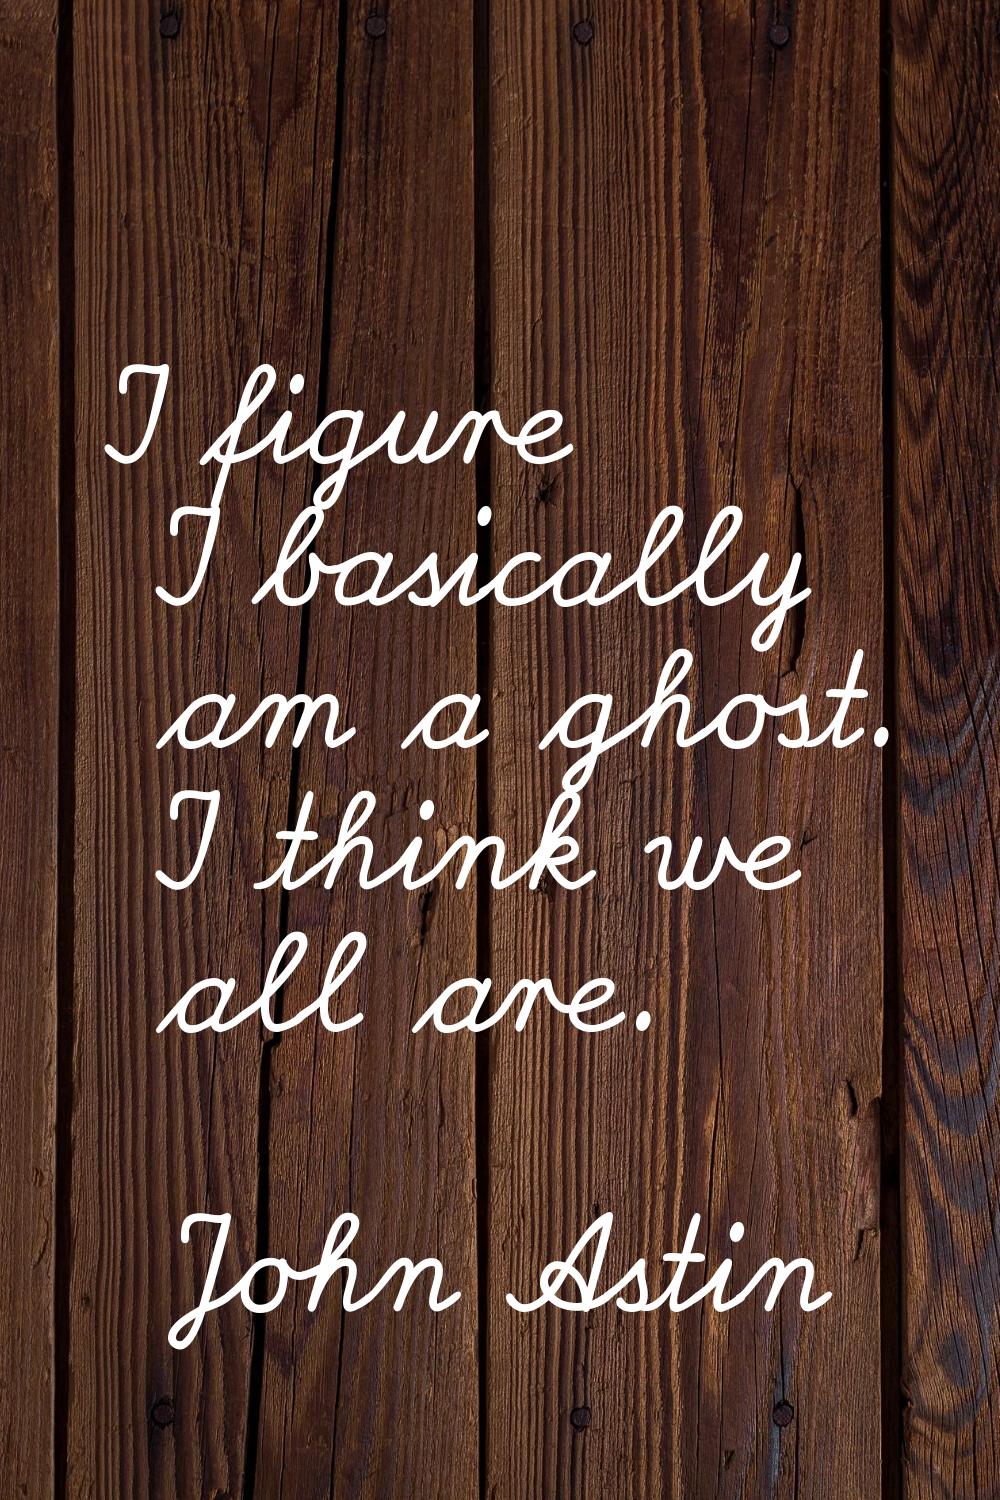 I figure I basically am a ghost. I think we all are.